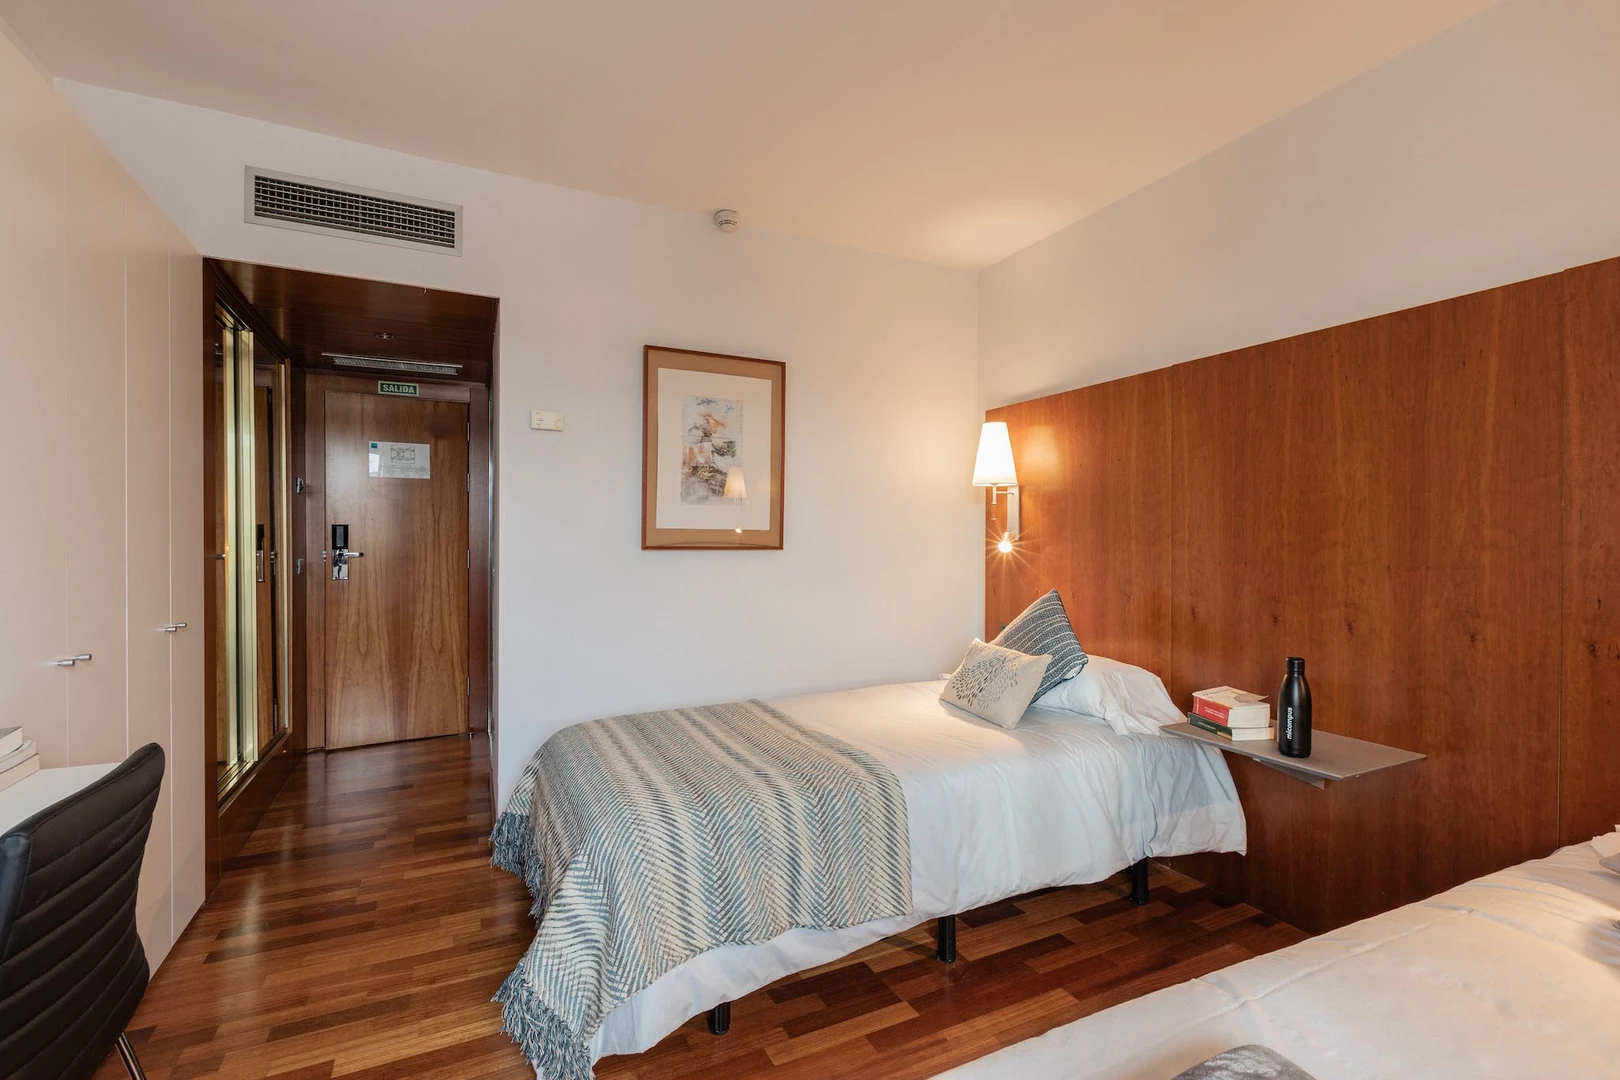 Shared room in 3-bedroom flat Pamplona/iruña